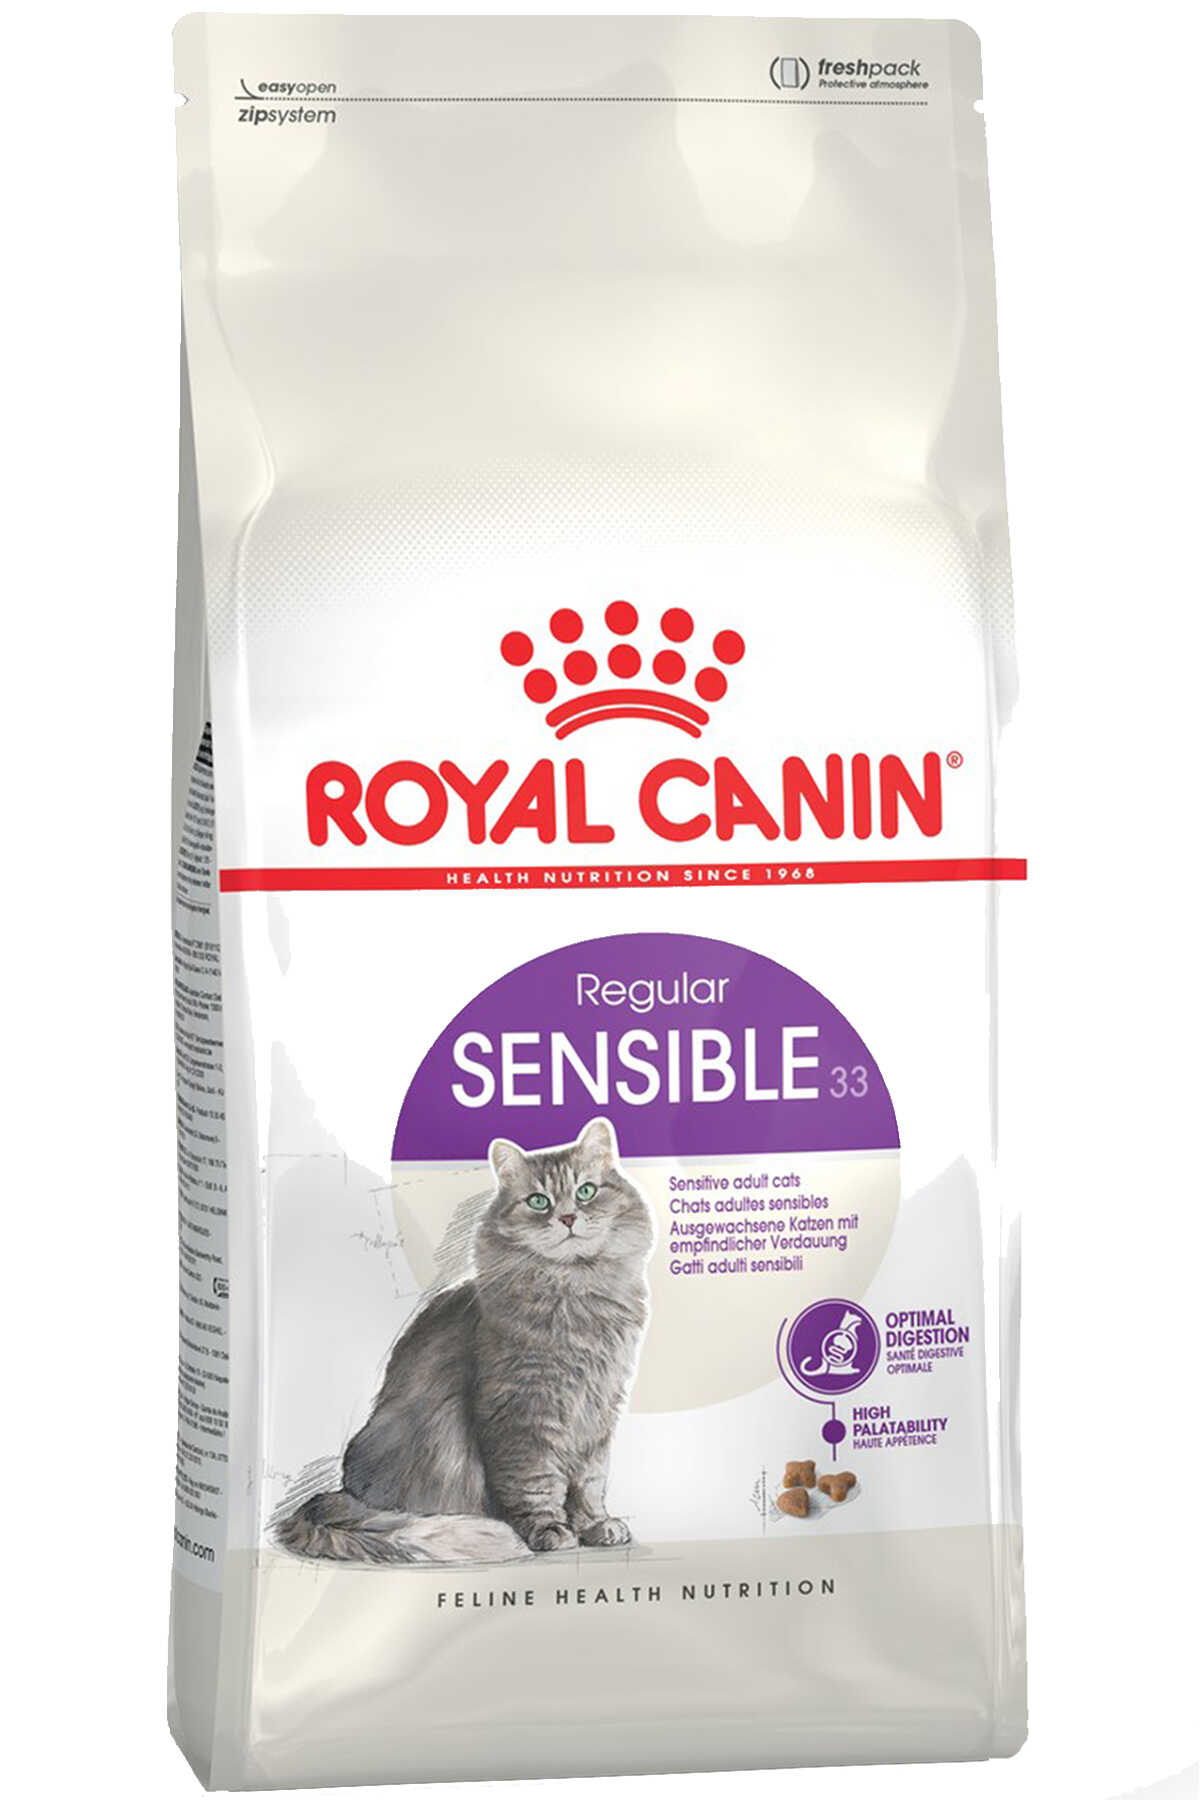 Royal Canin Sensible 33 Hassas Sindirim Sistemi Olan Kediler Icin Yetiskin Kedi Mamasi 2kg Evinemama